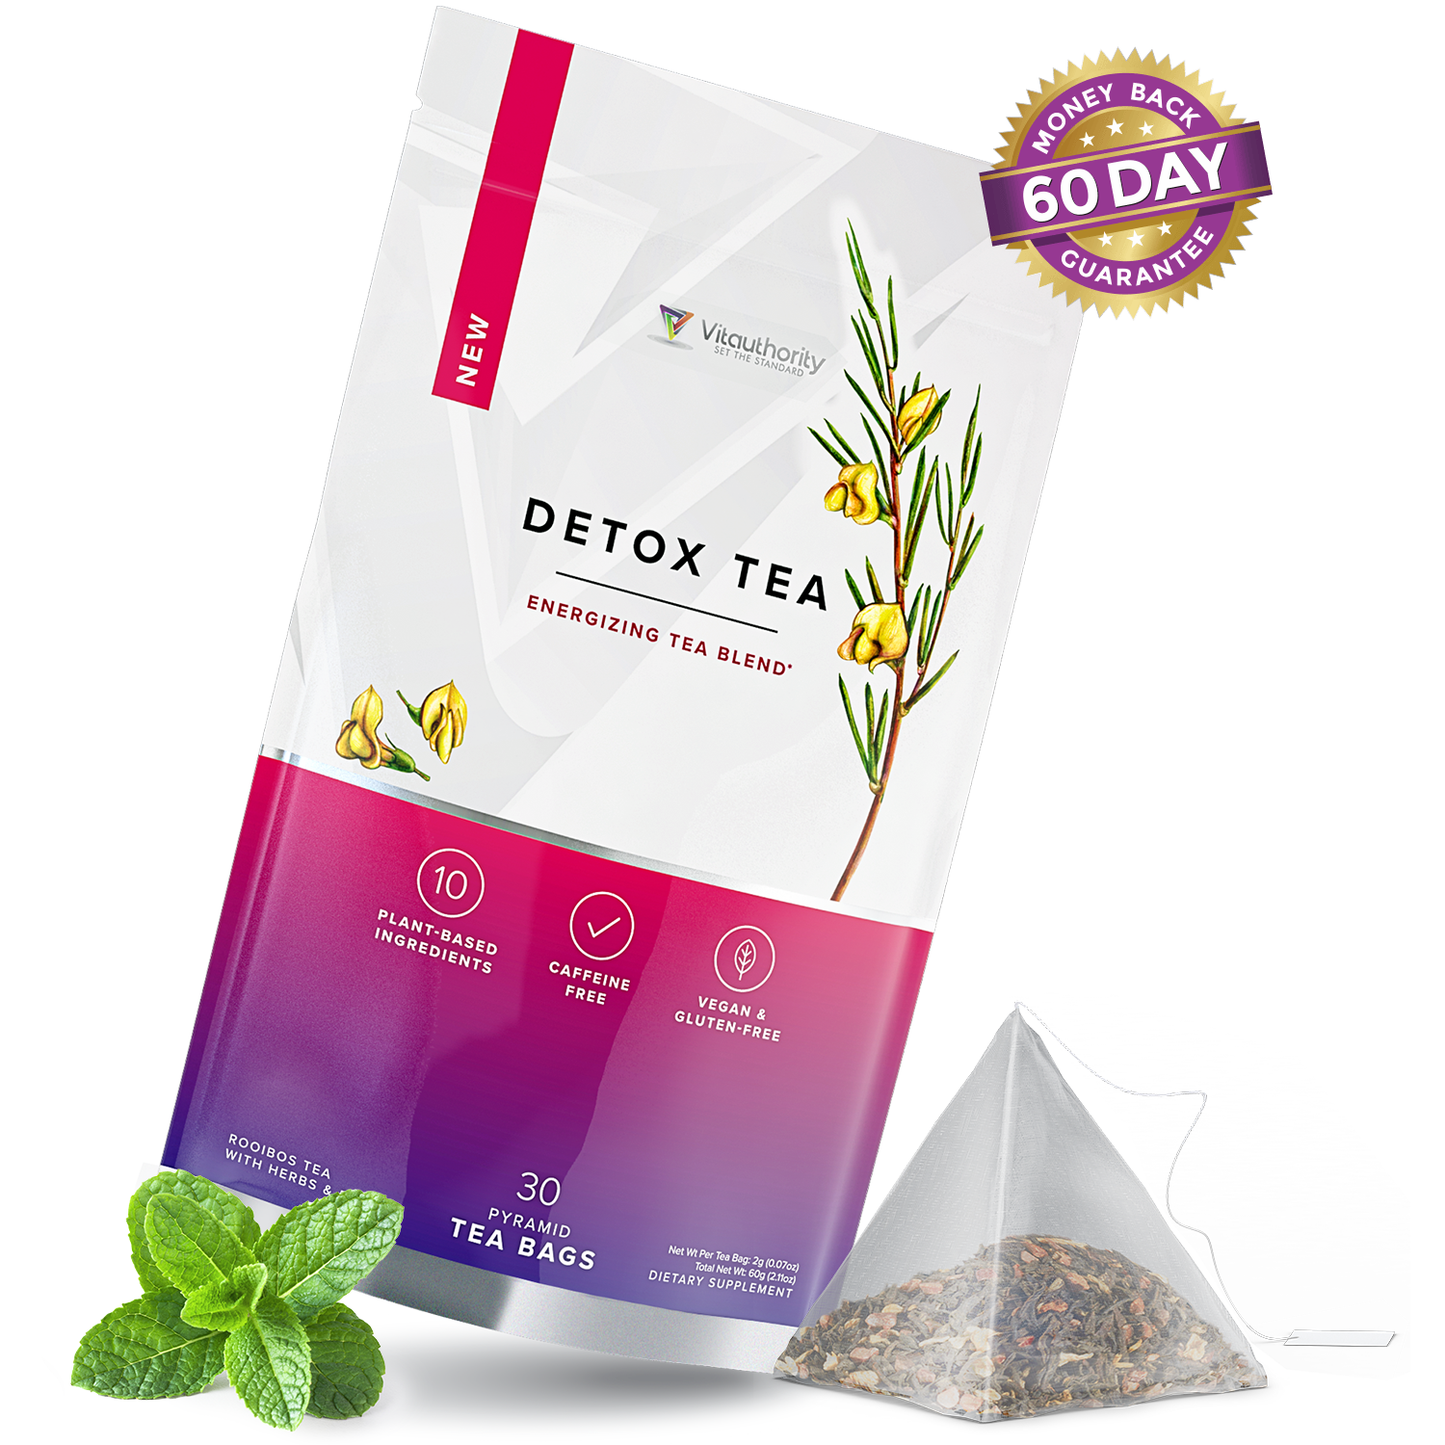 PROMO: Detox Tea